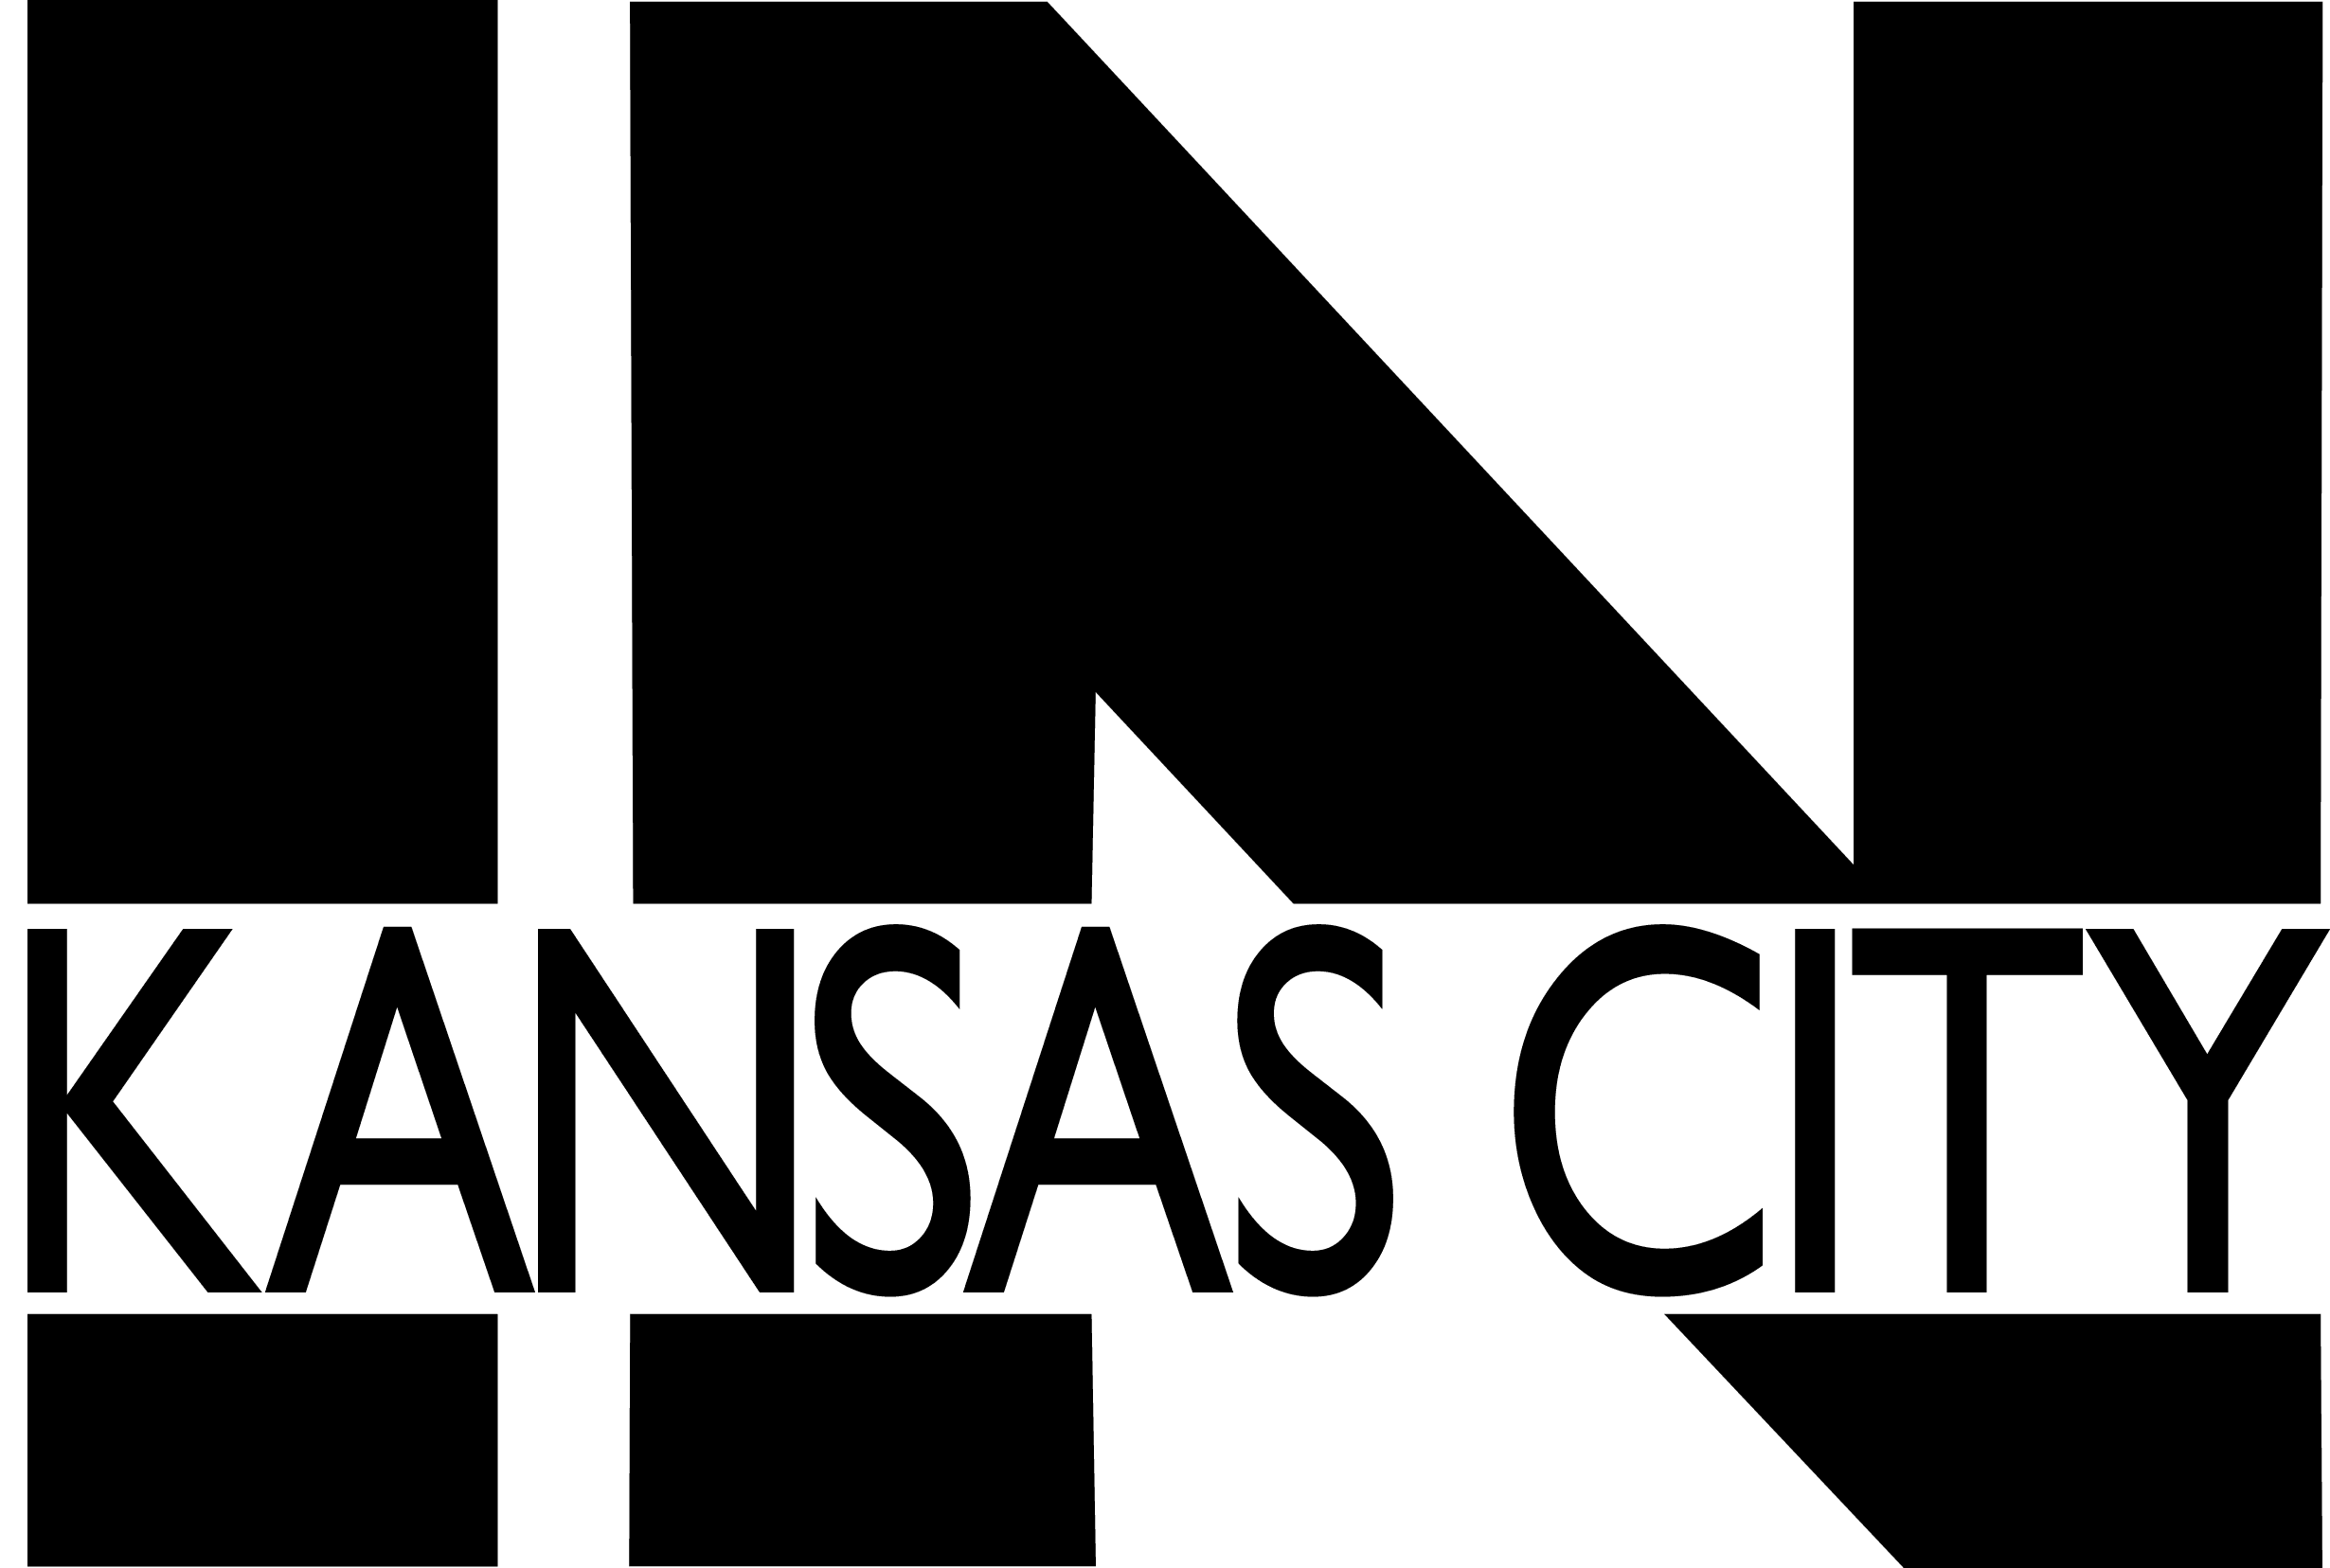 In Kansas City magazine logo